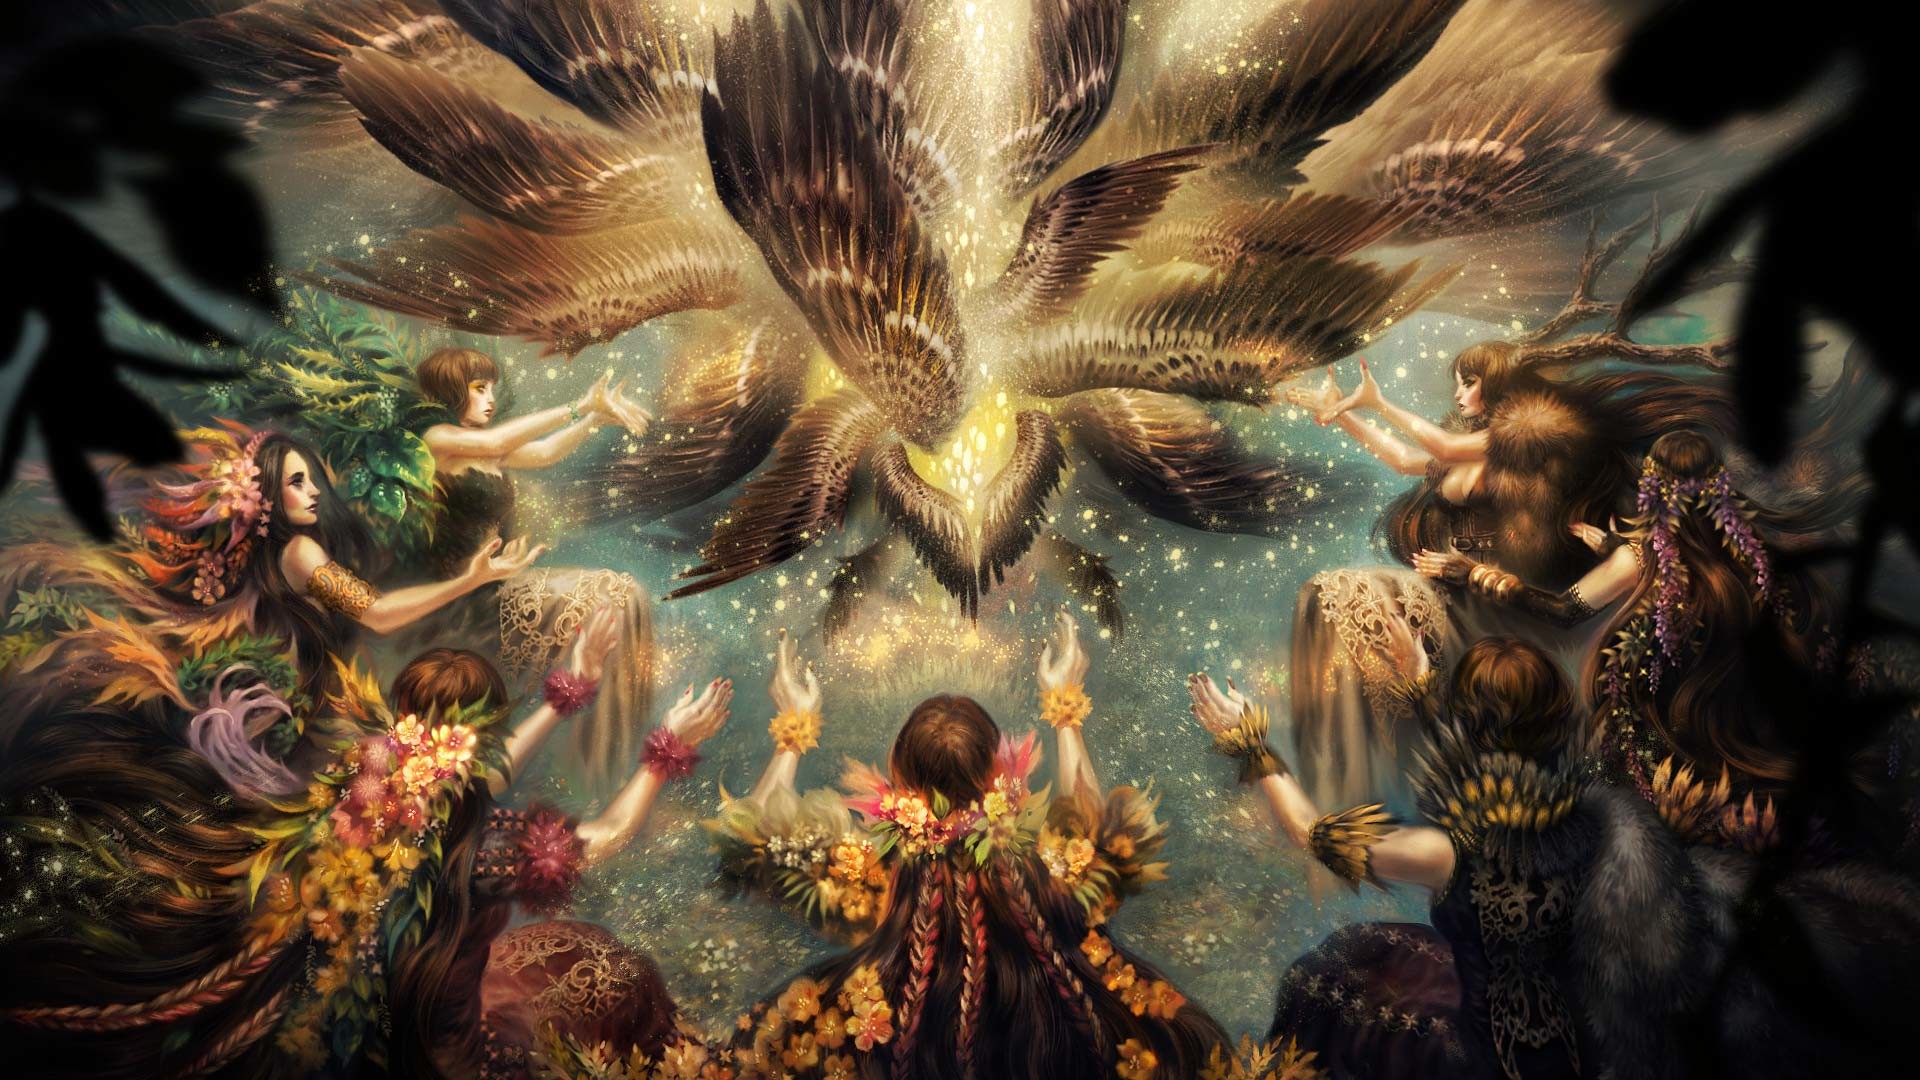 Watermother Jian Digital Art Fantasy Art Surreal Angel Wings Flowers 1920x1080